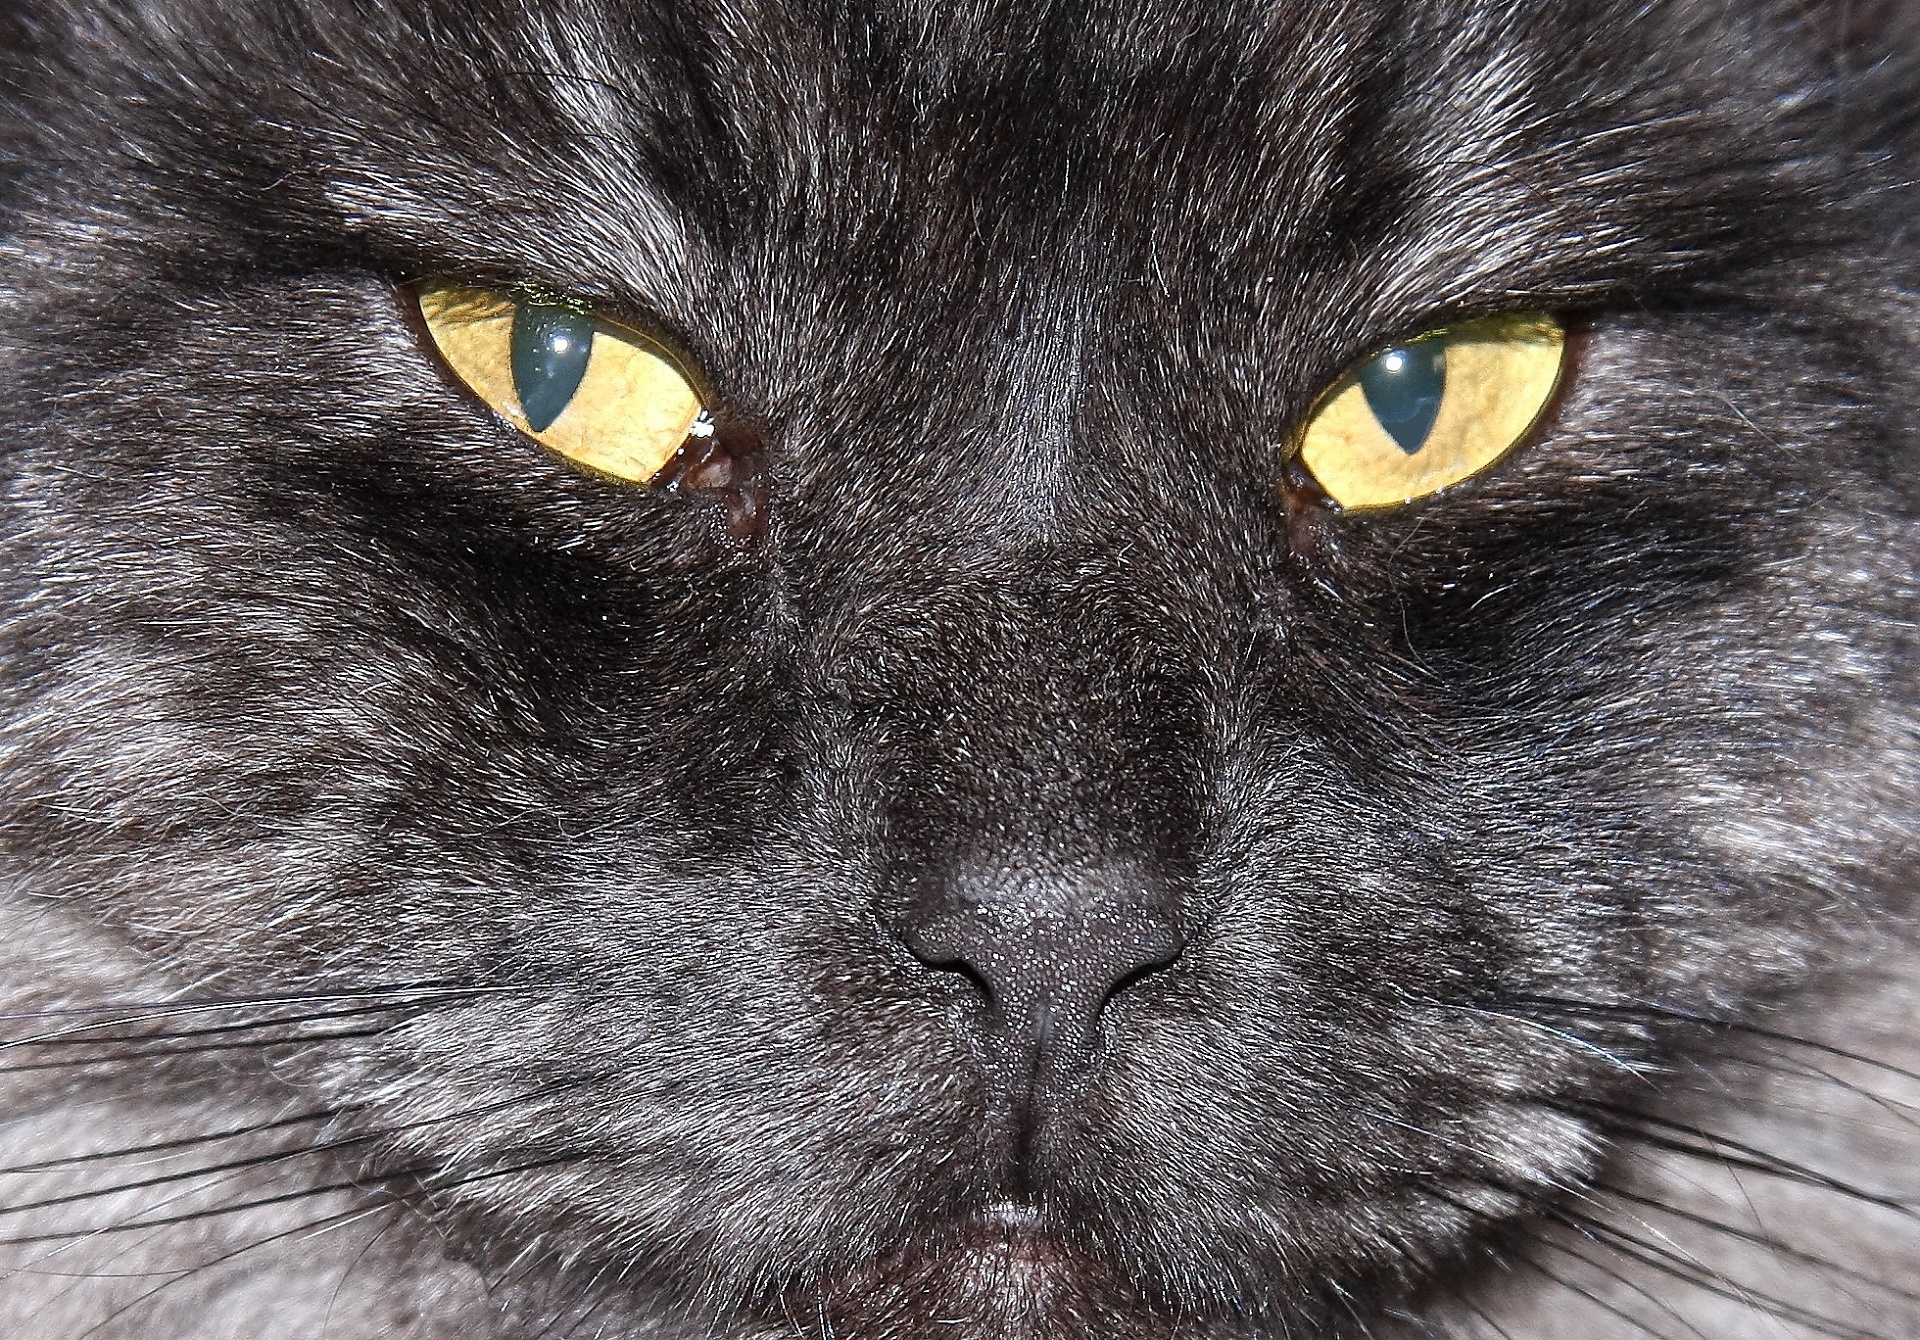  Black Cat Face  Free Stock Photo Public Domain Pictures